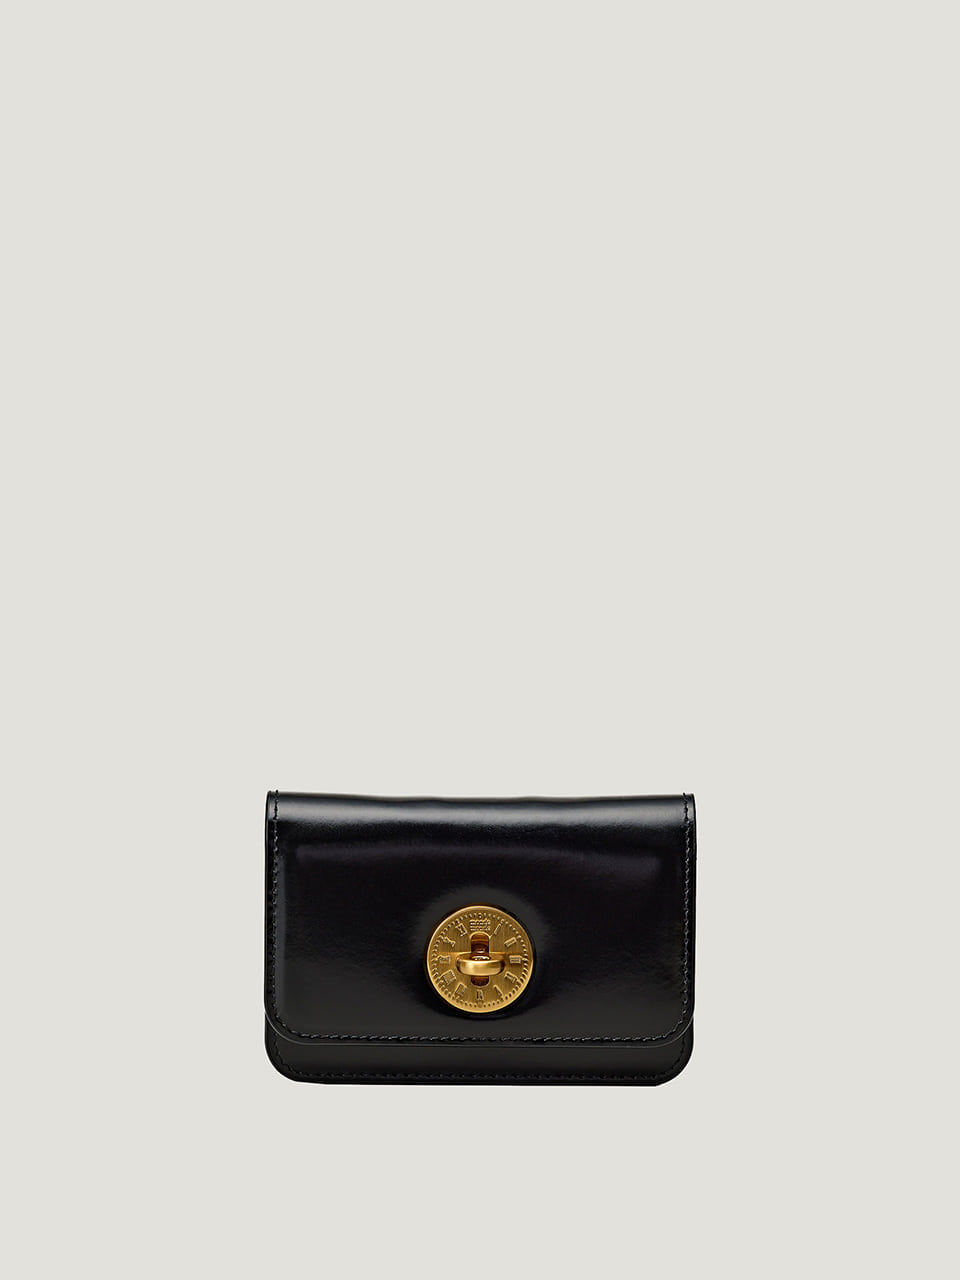 monde wallet black gold